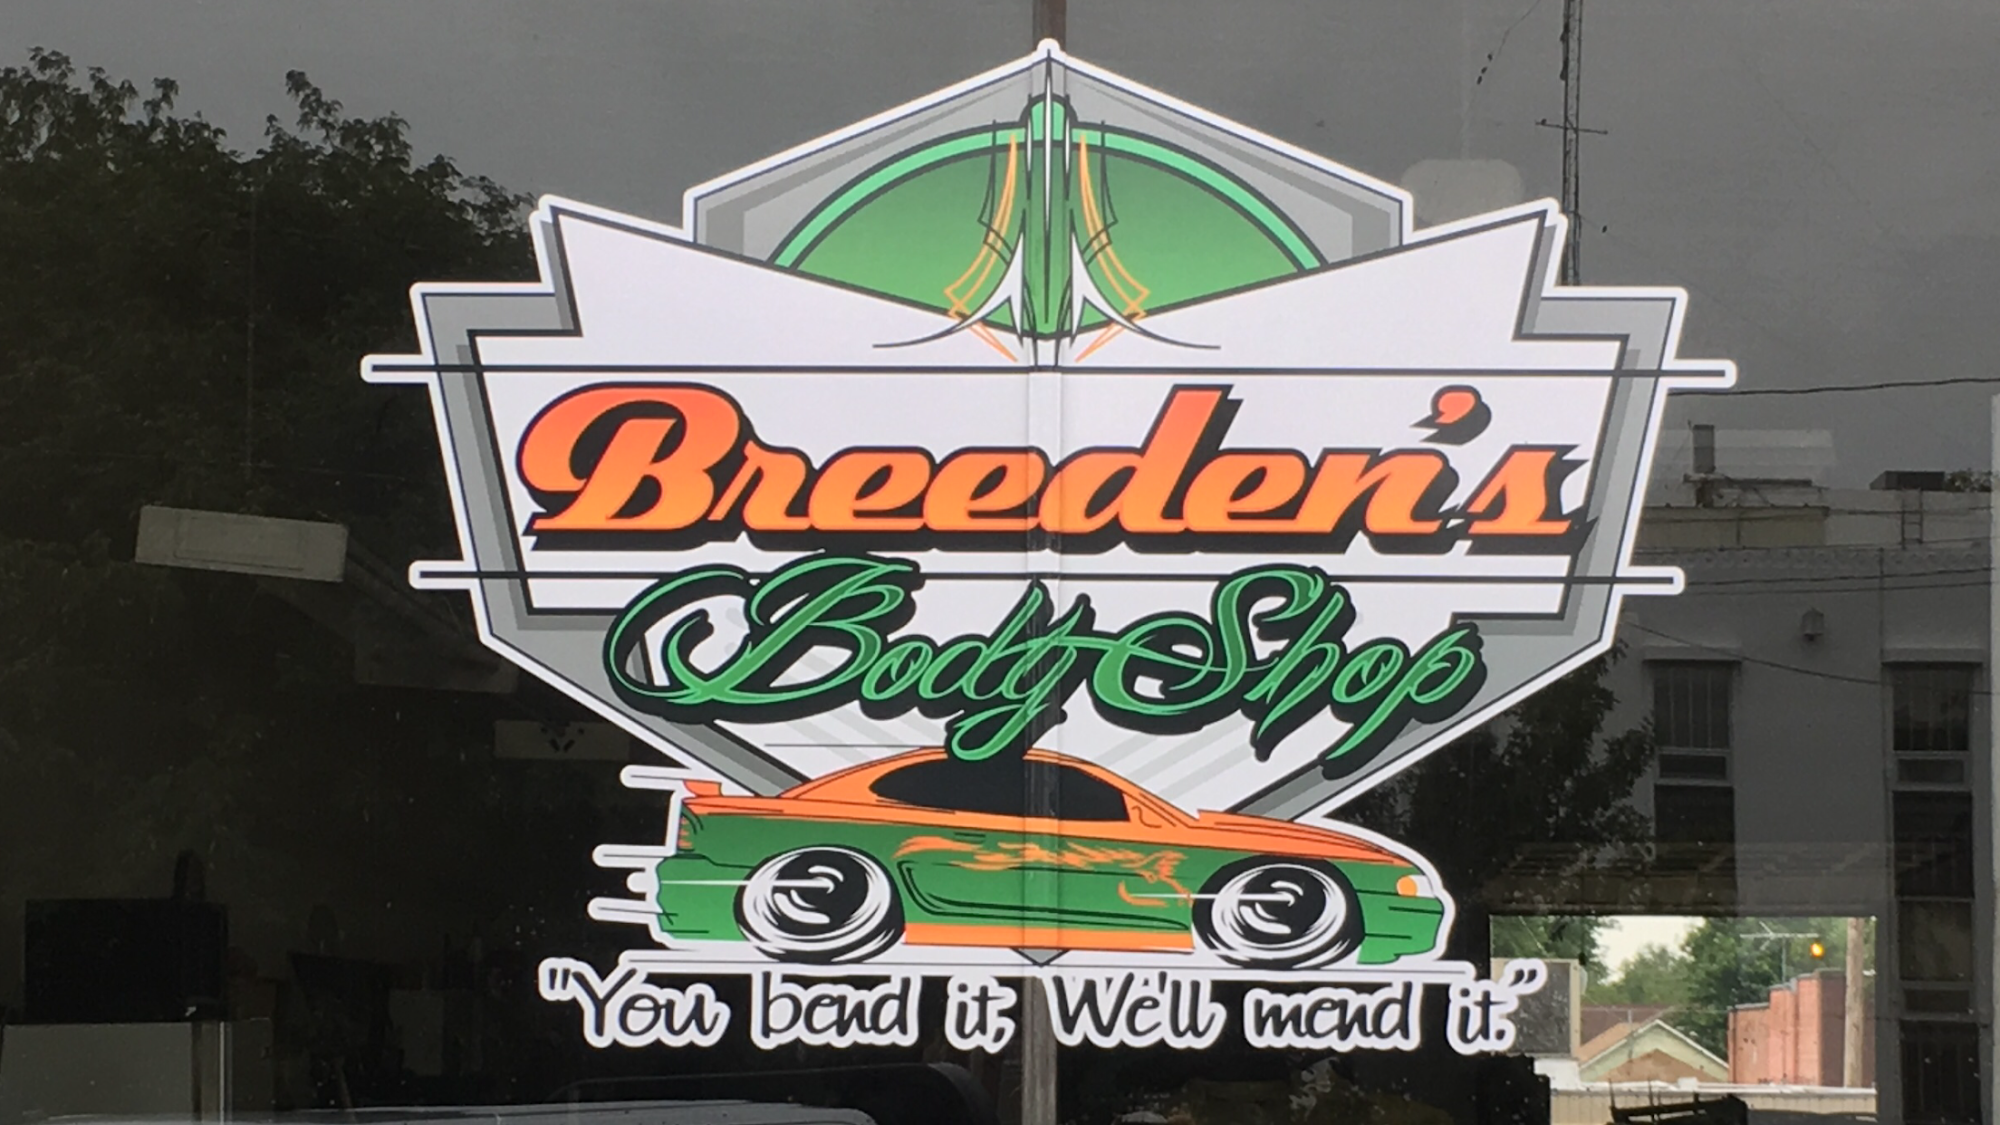 Breeden's Body Shop